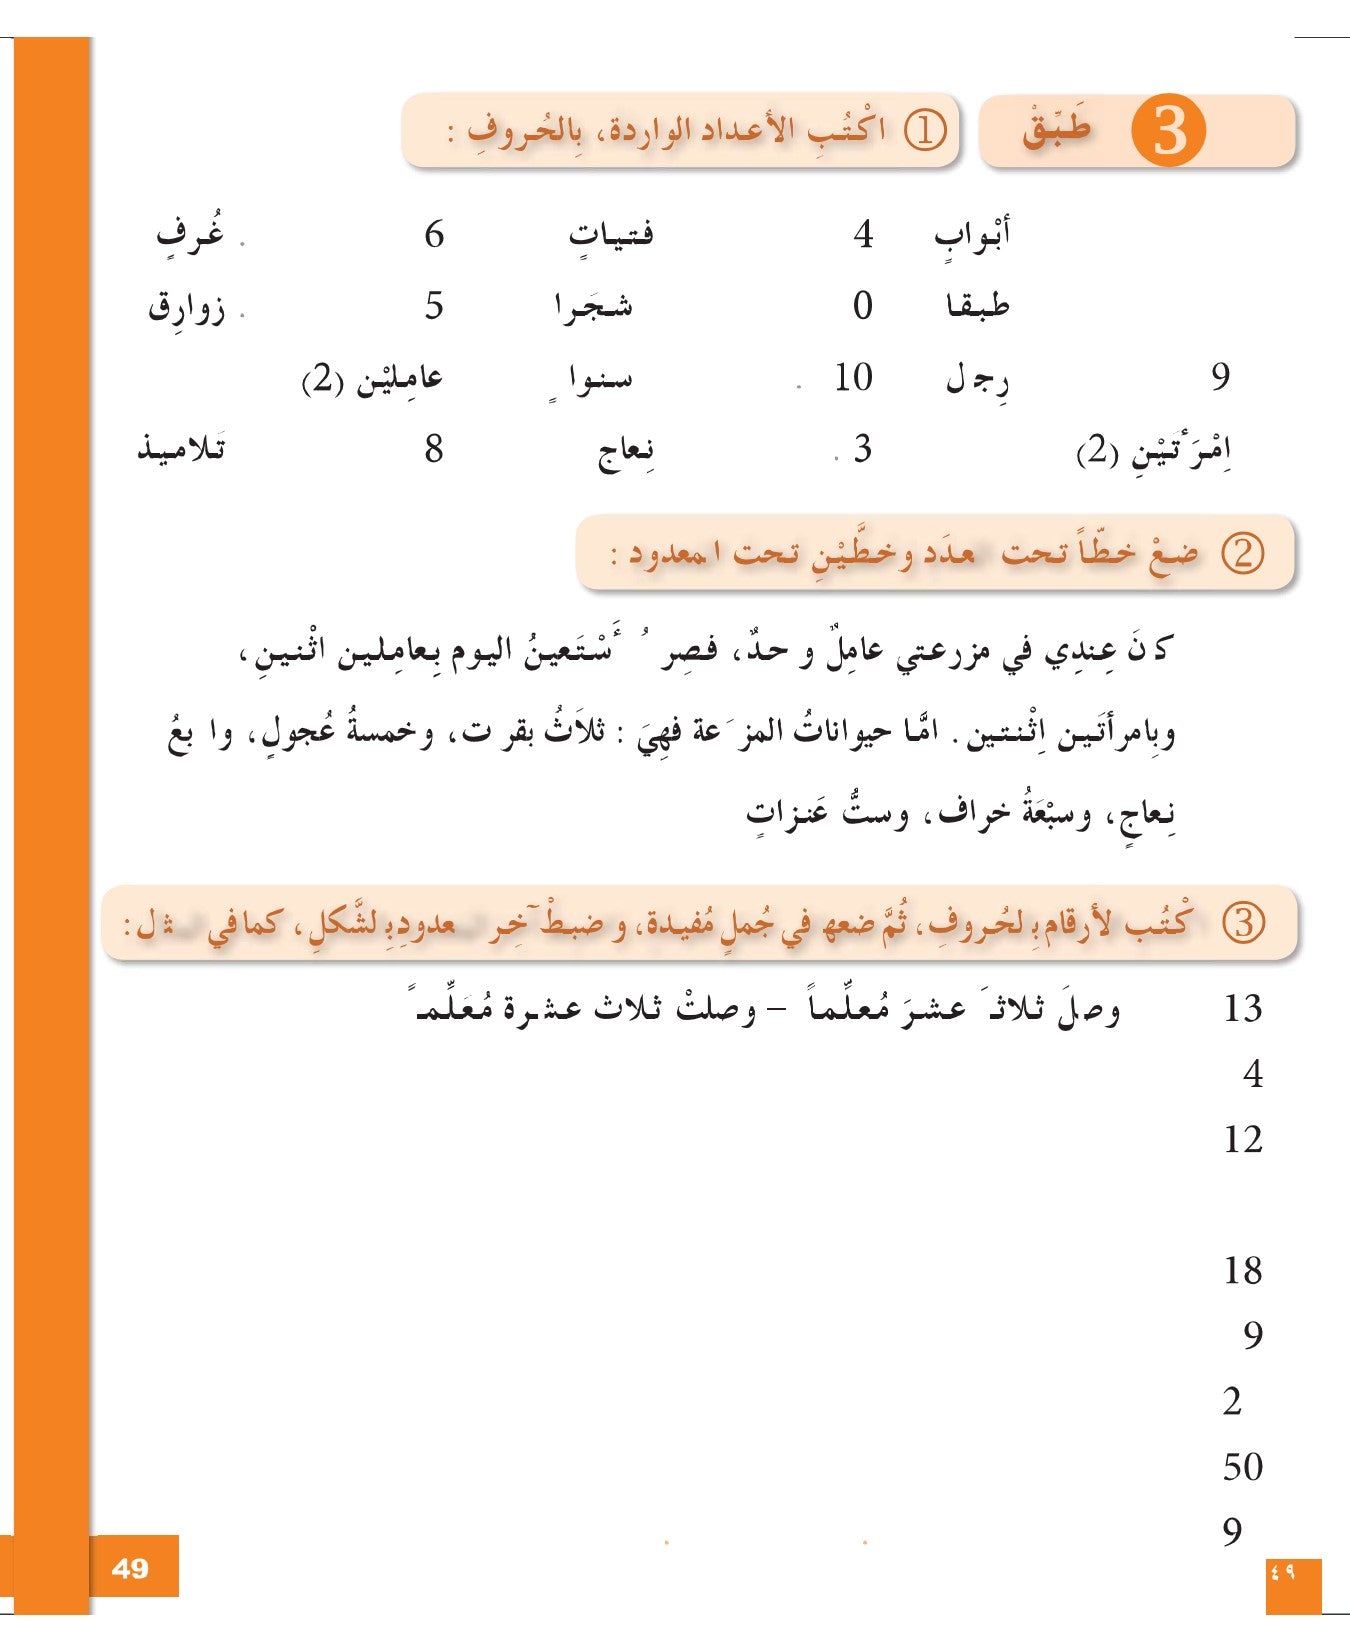 I Love and Learn Arabic (أحب و أتعلم العربية) - Level 8 - Workbook